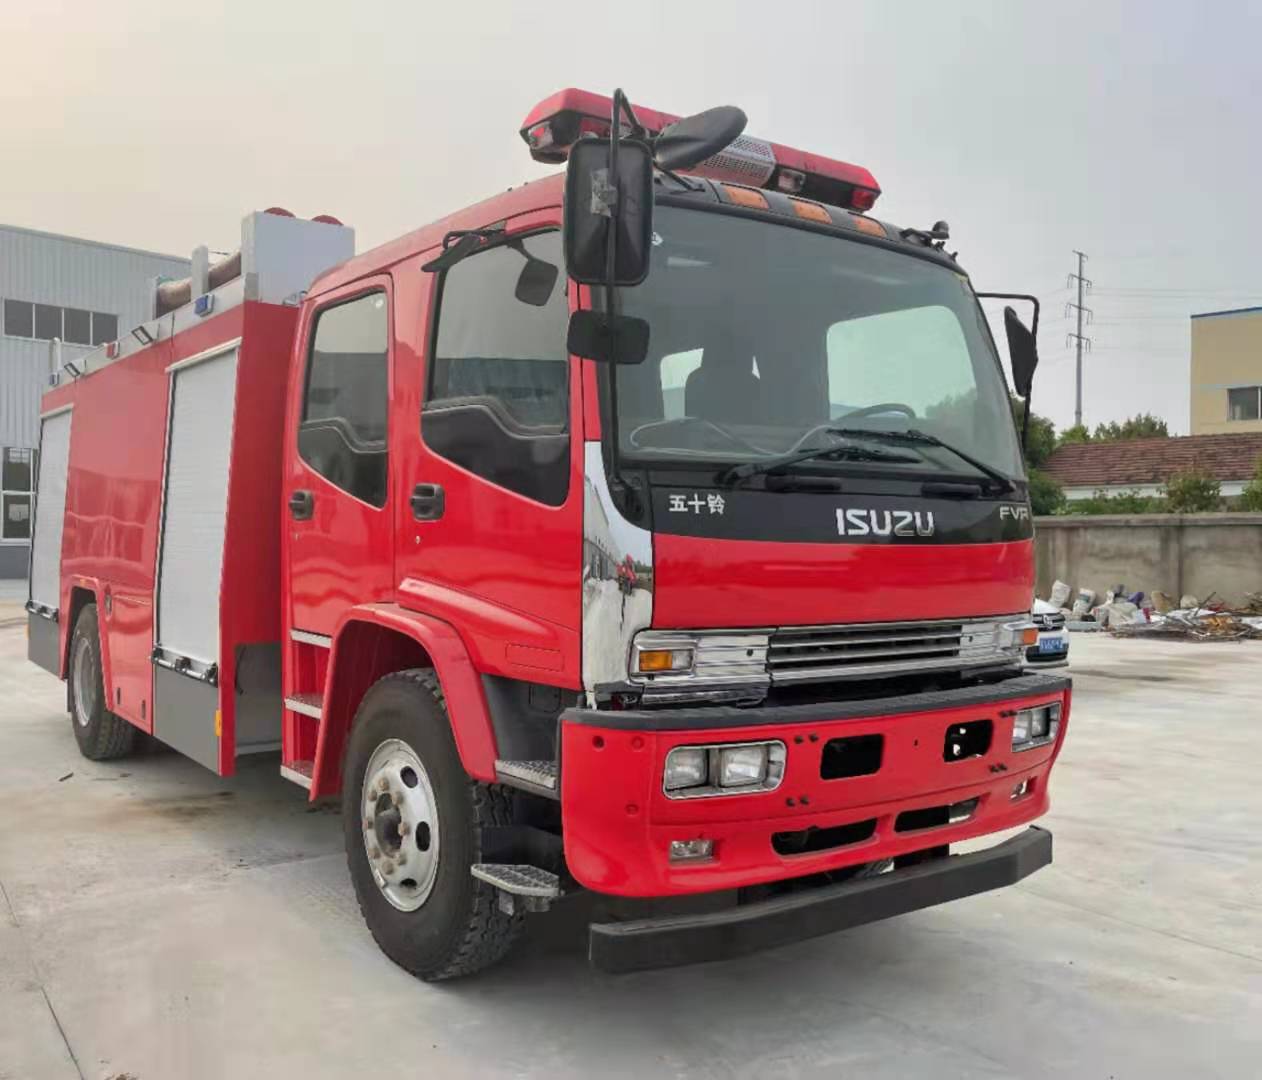 ISUZU tanker pumper fire-fighting truck